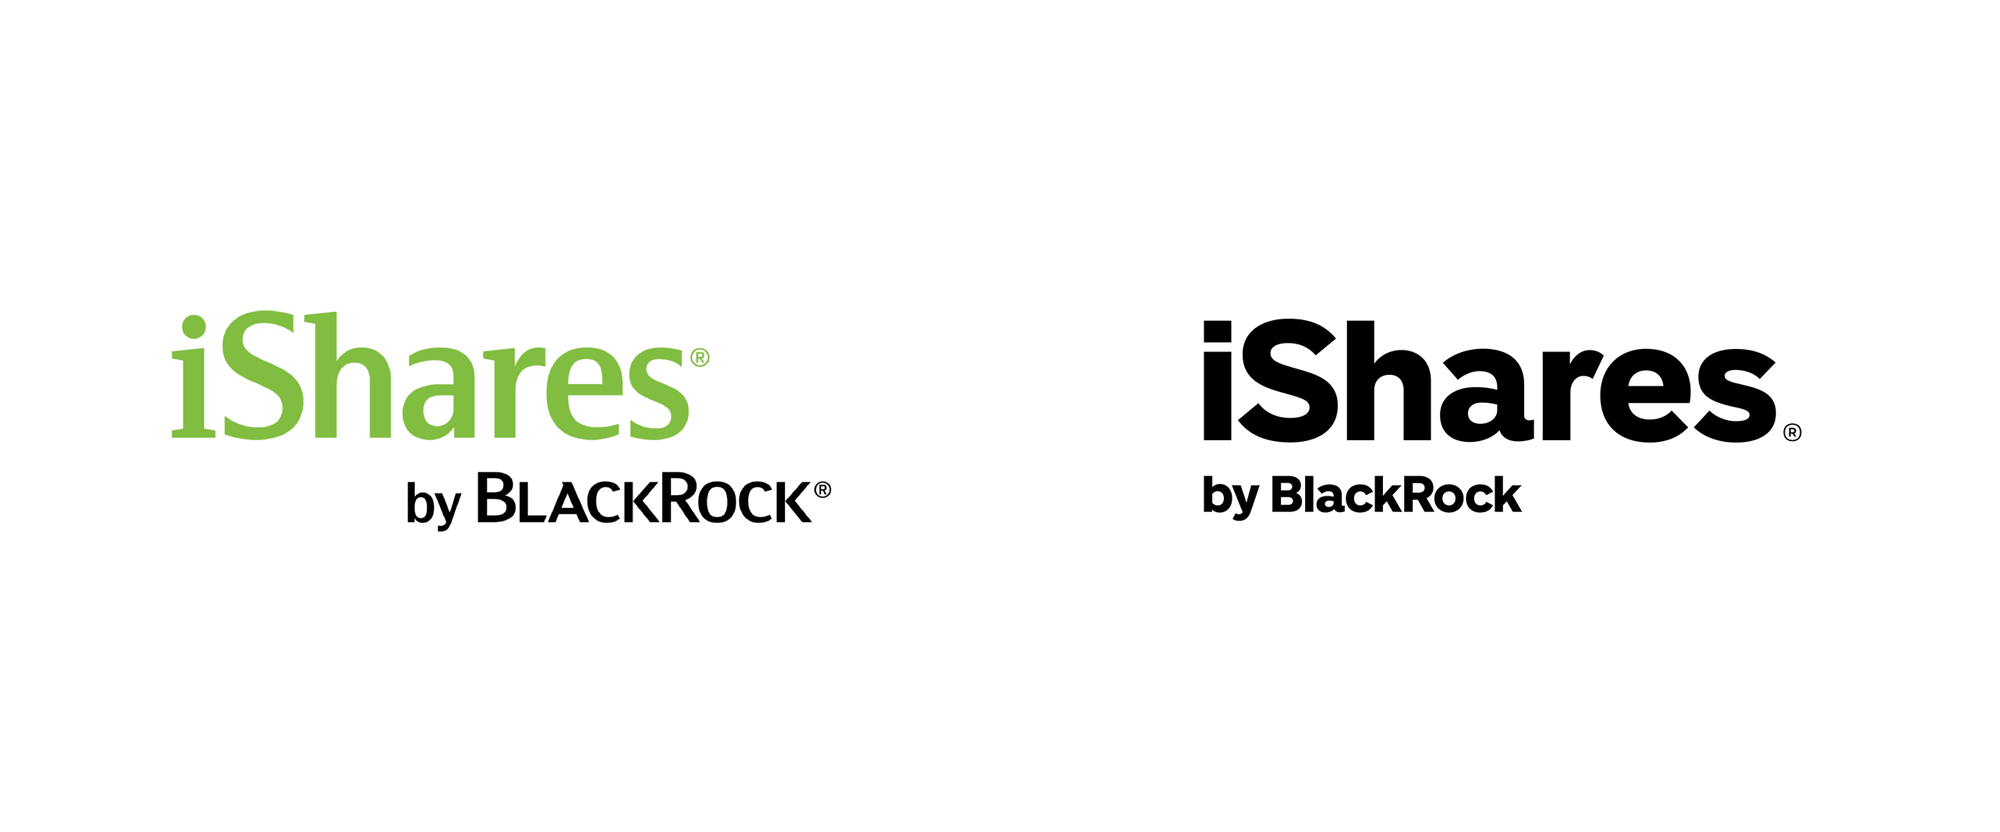 Blackrock Logo - Brand New: New Logo and Identity for iShares by Turner Duckworth